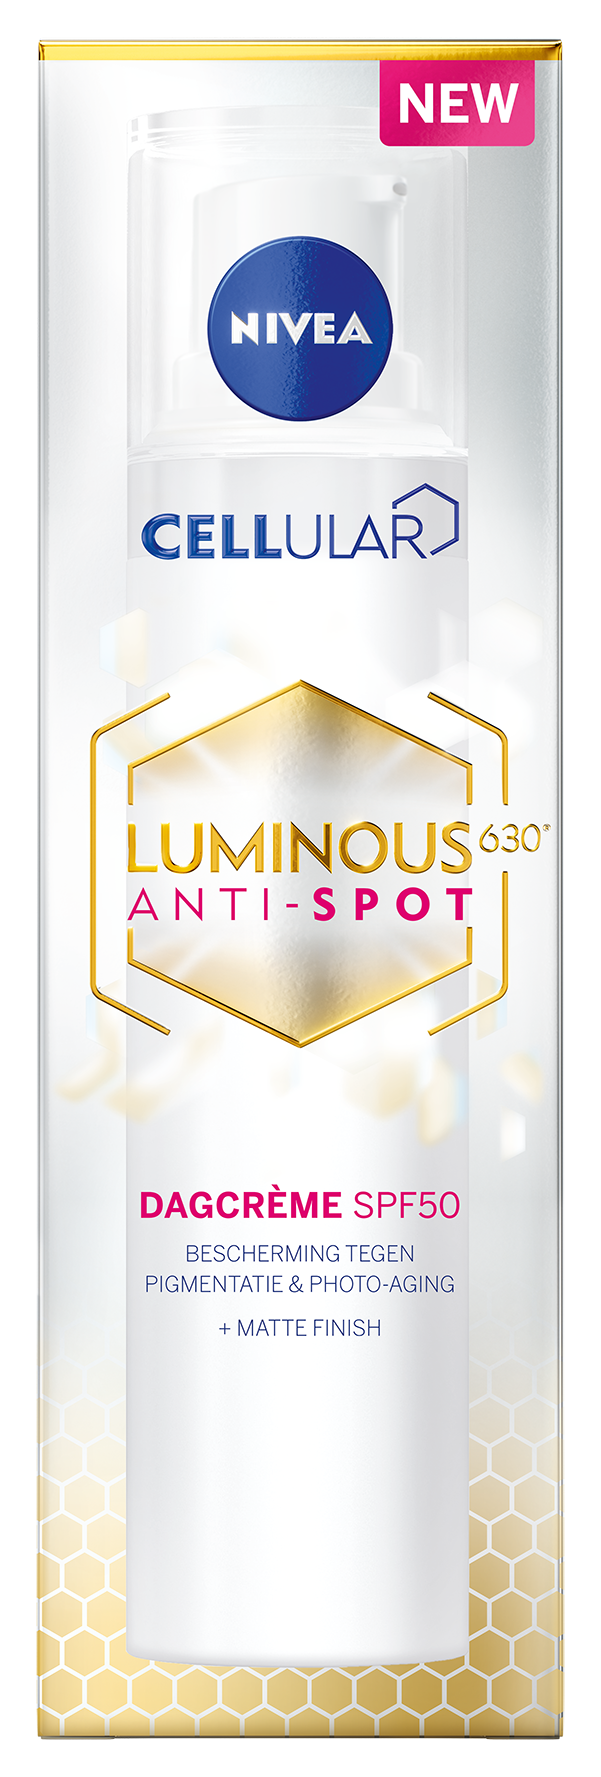 NIVEA CELLULAR LUMINOUS630® Anti-Spot productlijn 